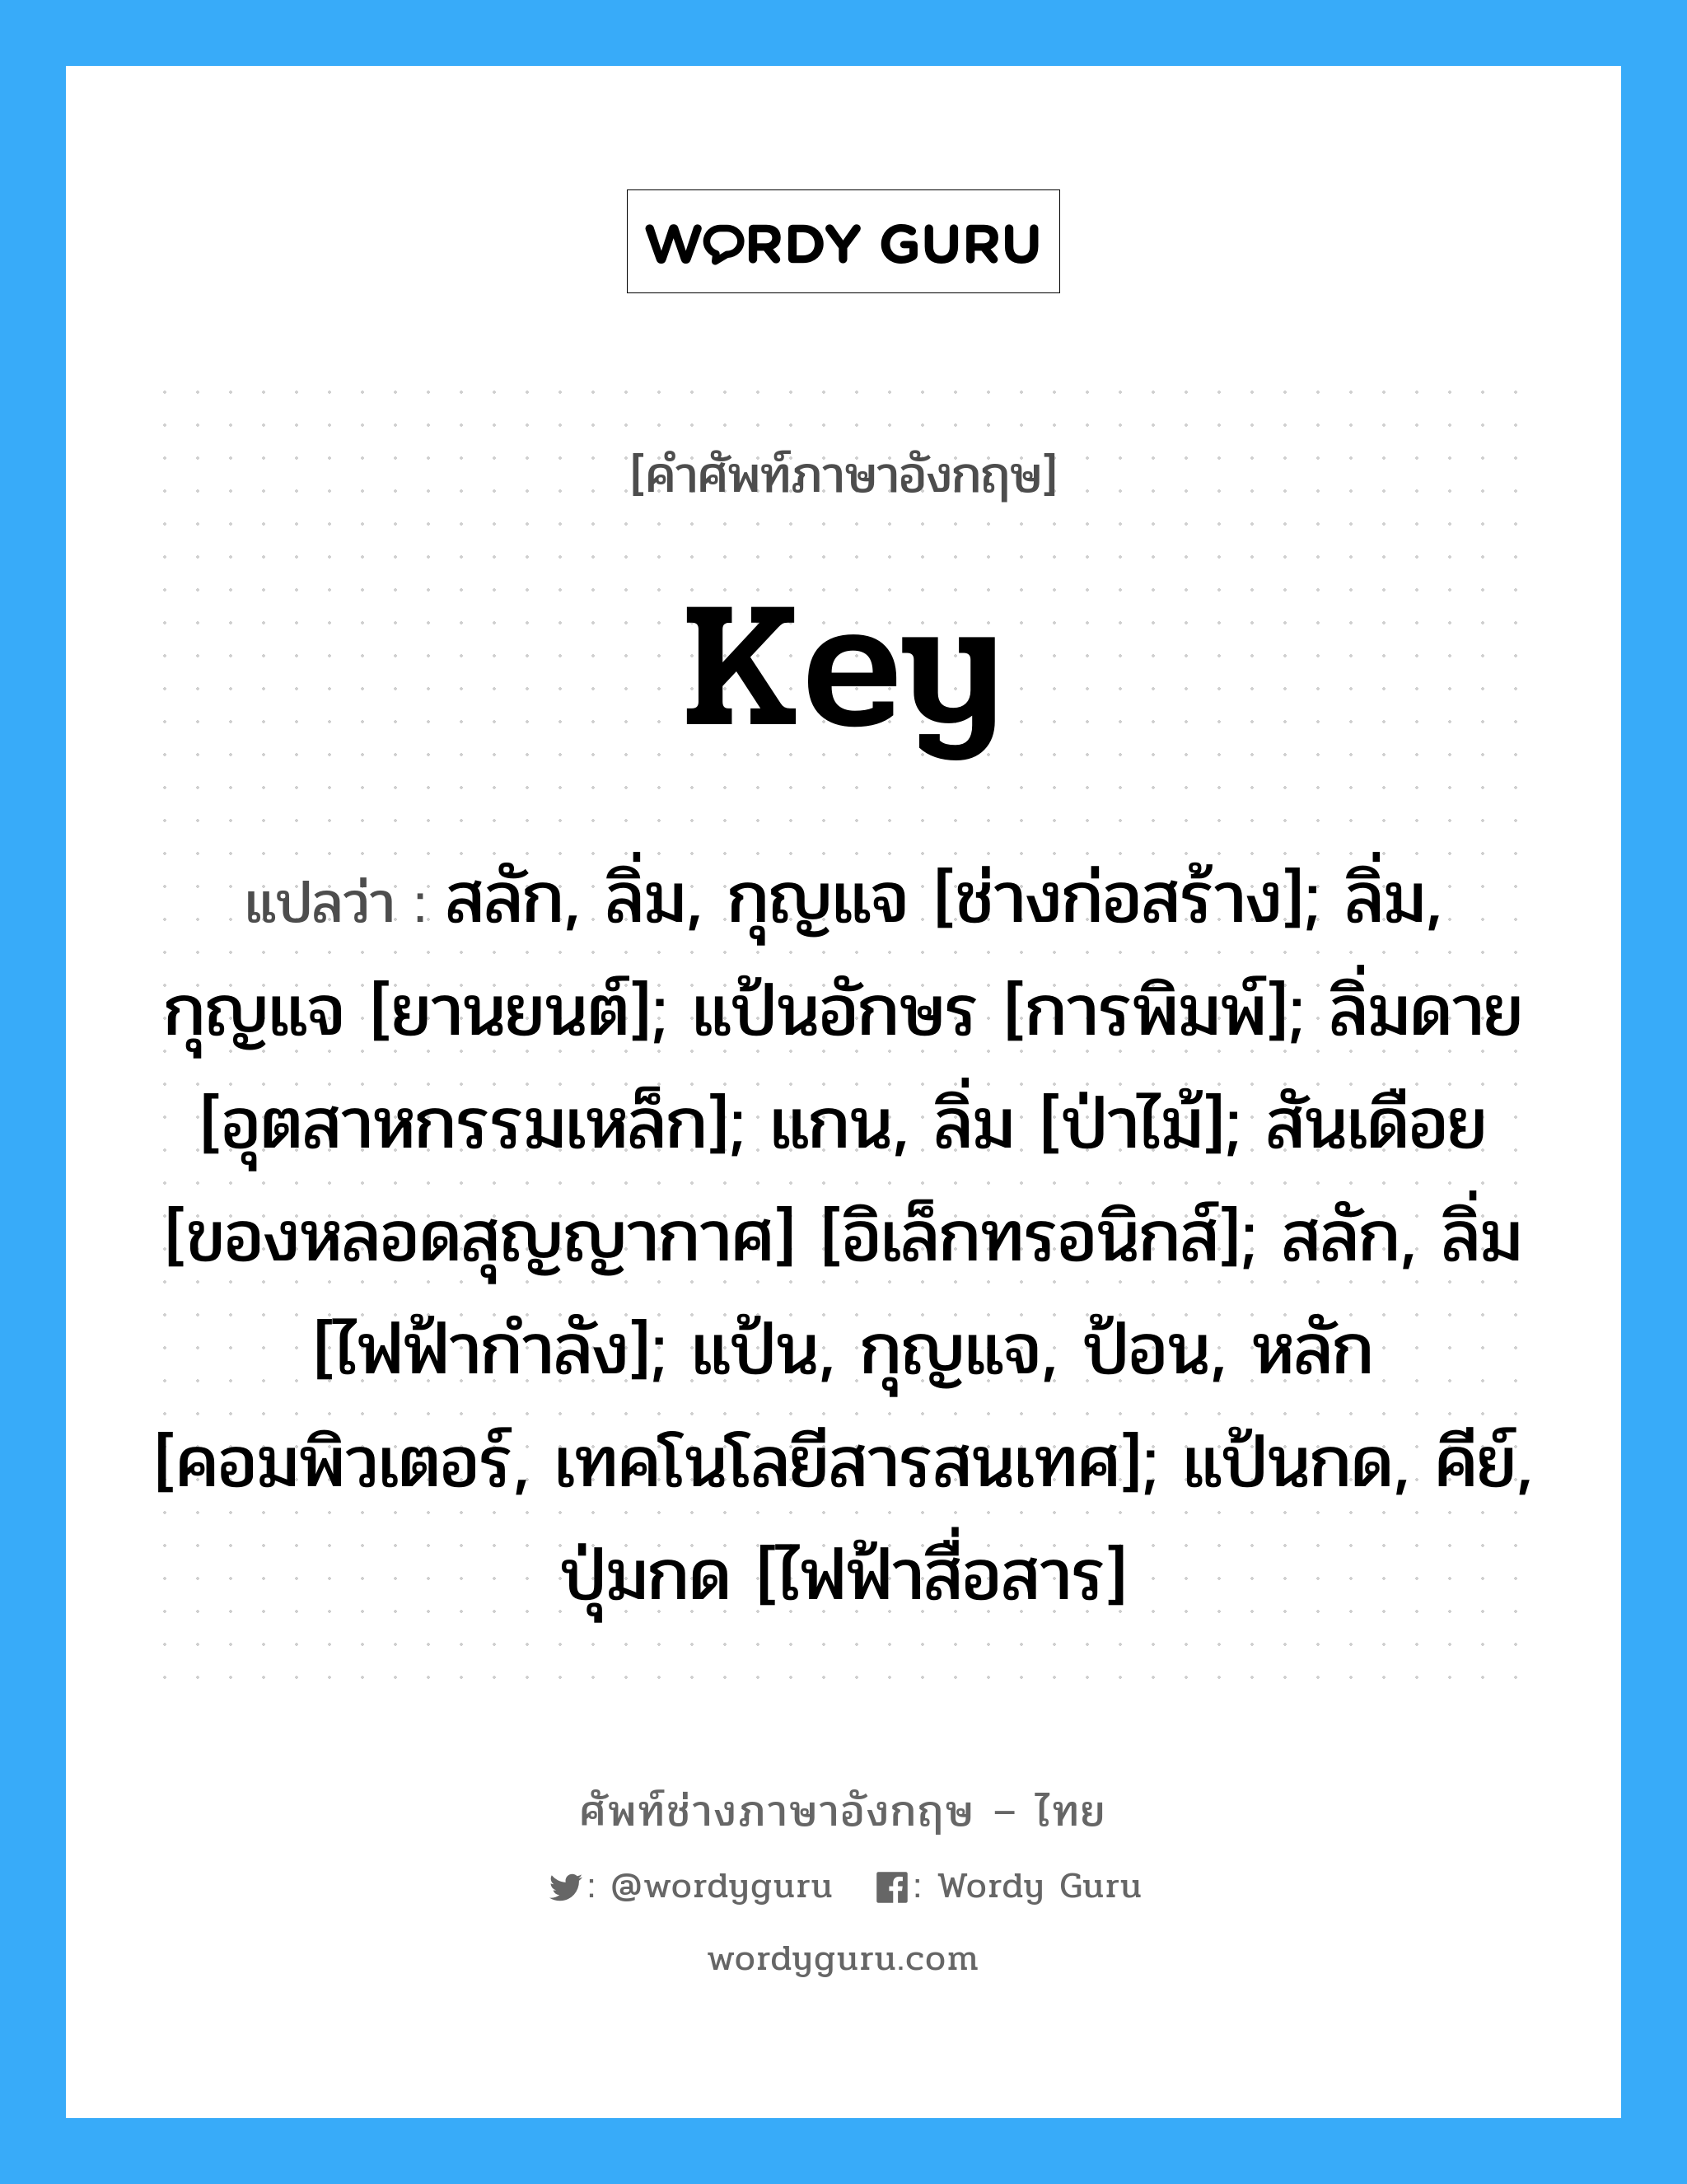 Key แปลว่า?, คำศัพท์ช่างภาษาอังกฤษ - ไทย Key คำศัพท์ภาษาอังกฤษ Key แปลว่า สลัก, ลิ่ม, กุญแจ [ช่างก่อสร้าง]; ลิ่ม, กุญแจ [ยานยนต์]; แป้นอักษร [การพิมพ์]; ลิ่มดาย [อุตสาหกรรมเหล็ก]; แกน, ลิ่ม [ป่าไม้]; สันเดือย [ของหลอดสุญญากาศ] [อิเล็กทรอนิกส์]; สลัก, ลิ่ม [ไฟฟ้ากำลัง]; แป้น, กุญแจ, ป้อน, หลัก [คอมพิวเตอร์, เทคโนโลยีสารสนเทศ]; แป้นกด, คีย์, ปุ่มกด [ไฟฟ้าสื่อสาร]